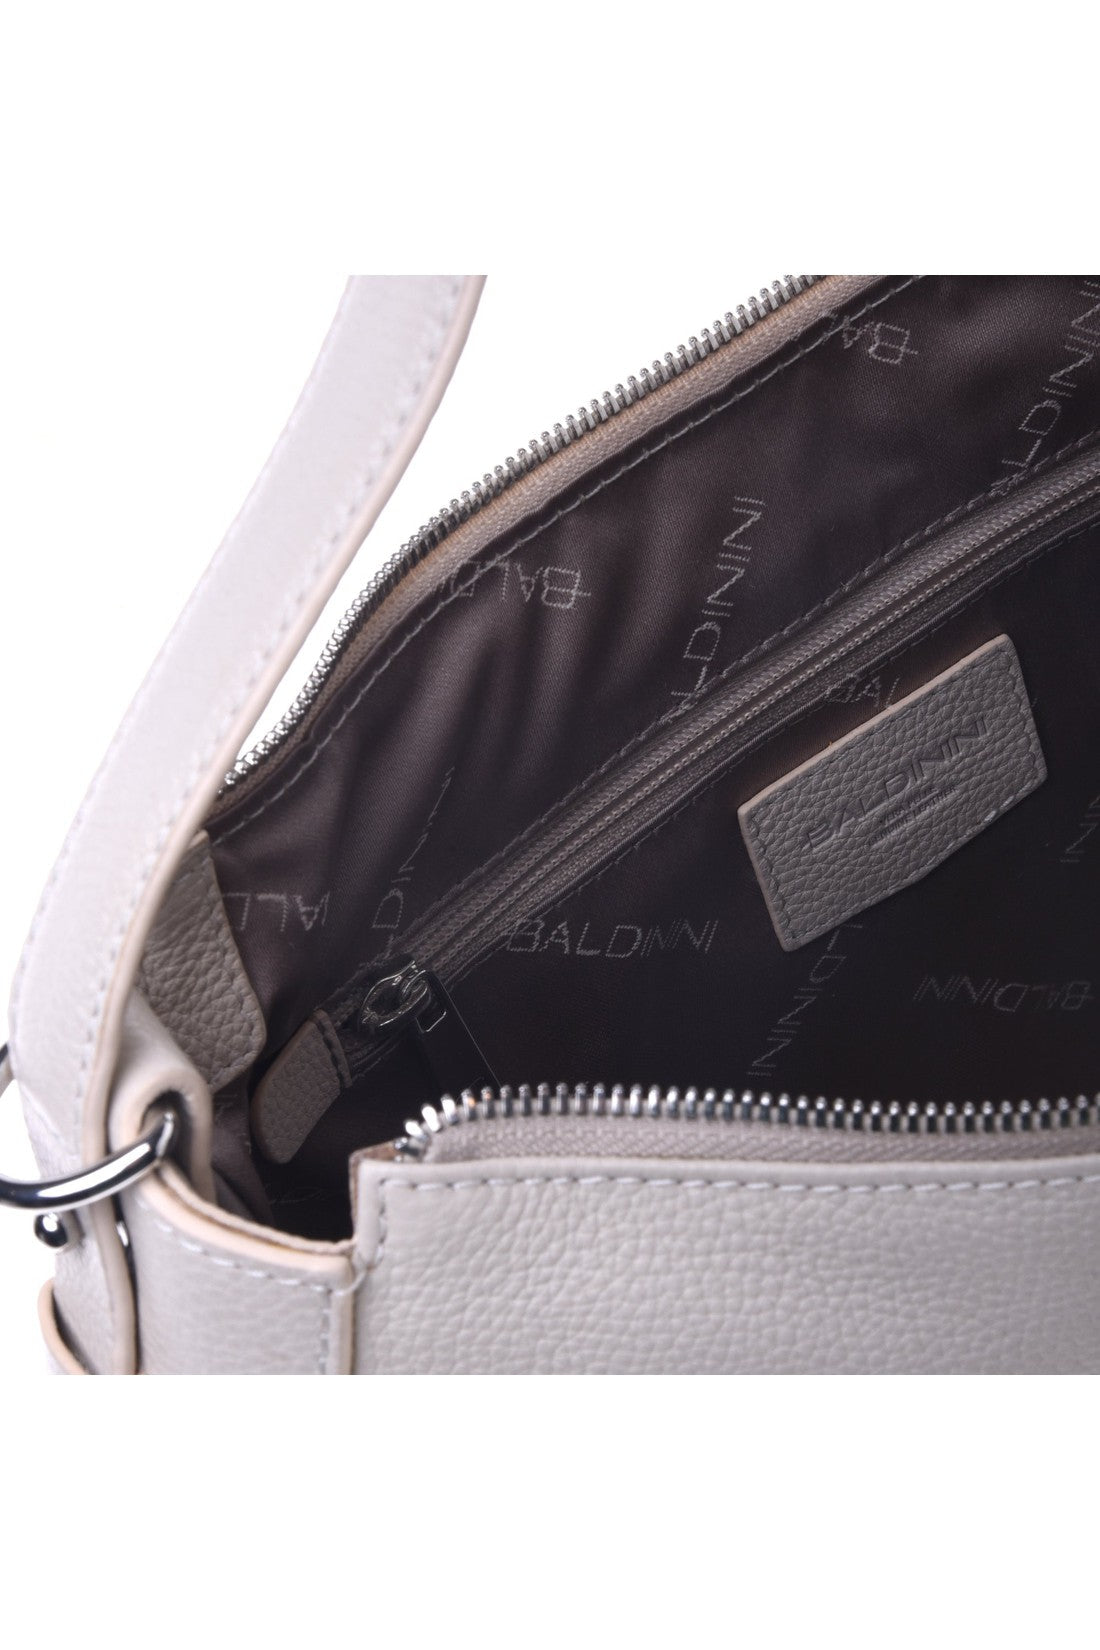 Shoulder bag in cream tumbled leather